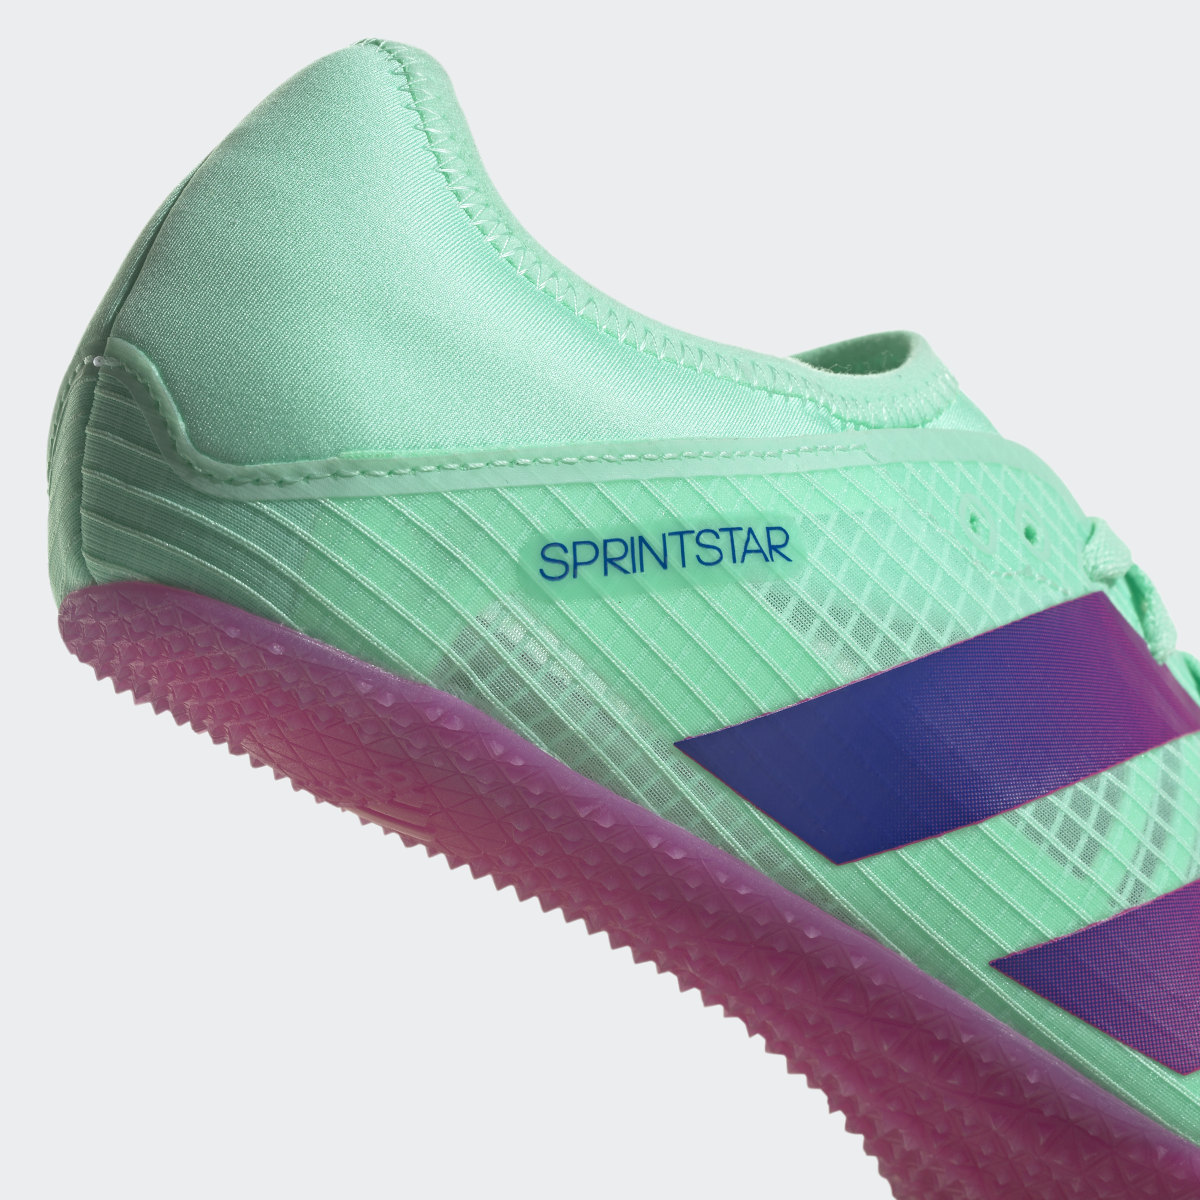 Adidas Adizero Sprintstar Running Shoes. 9